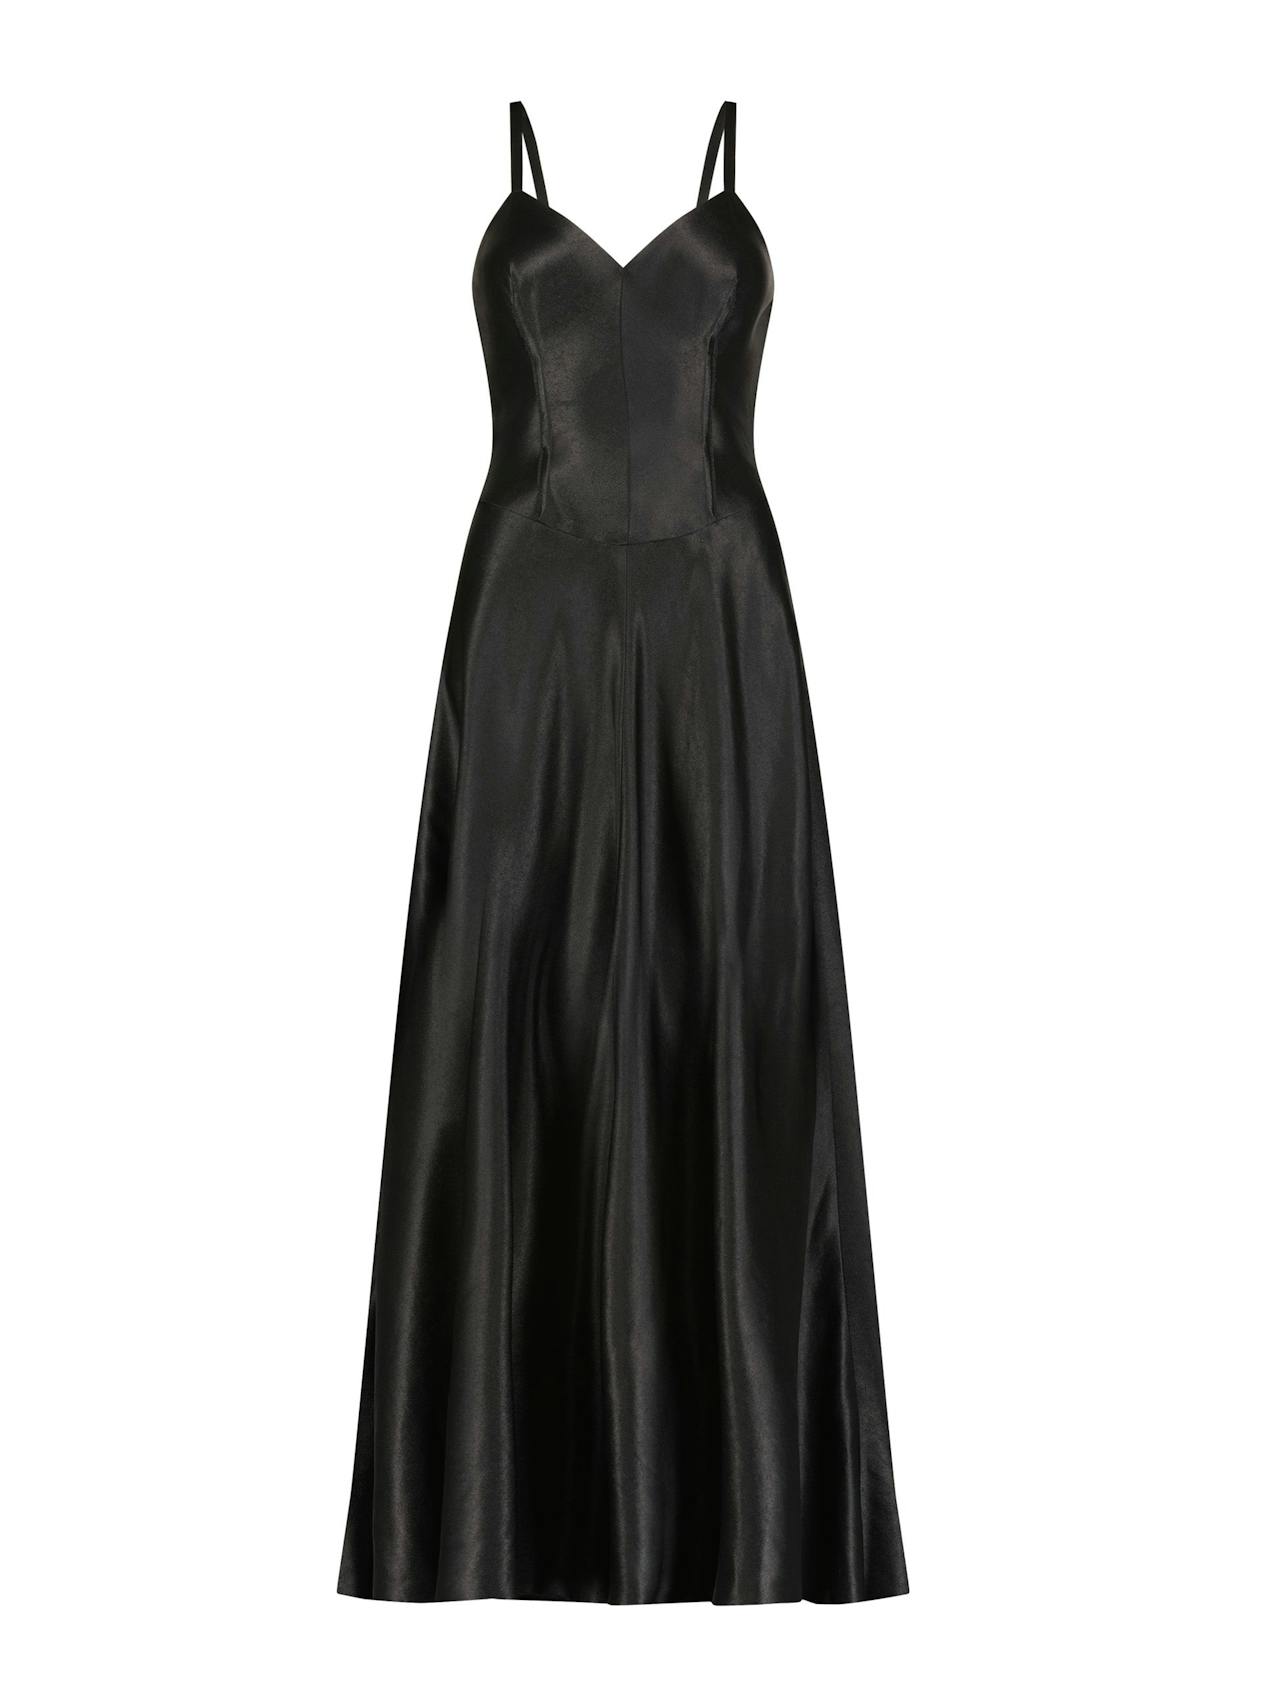 Black satin swing dress